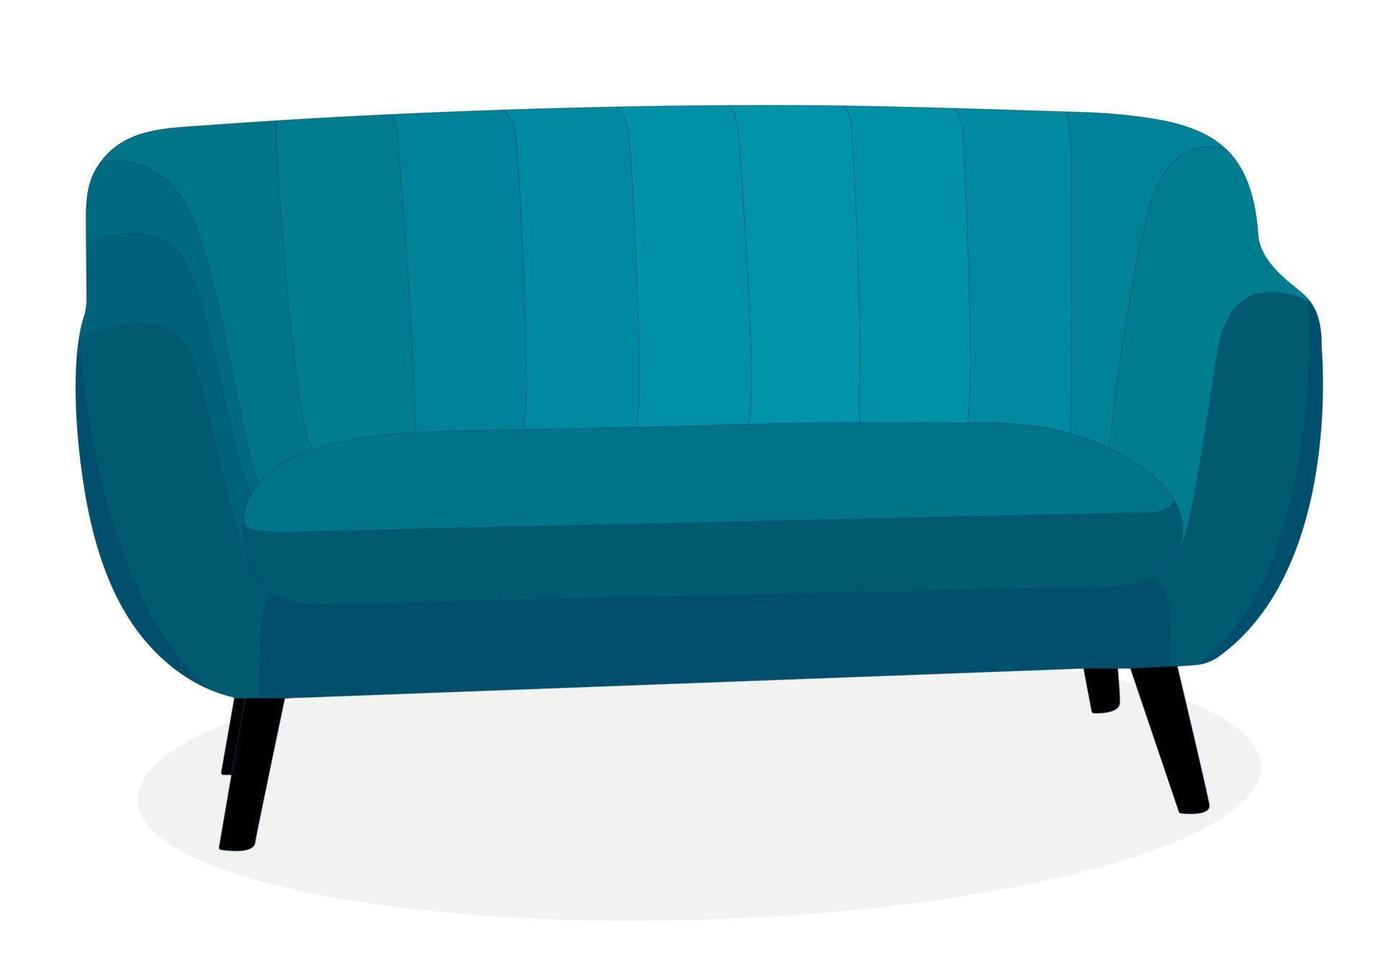 Fashionable comfortable stylish sofa. Object, model of furniture. Flat style. vector